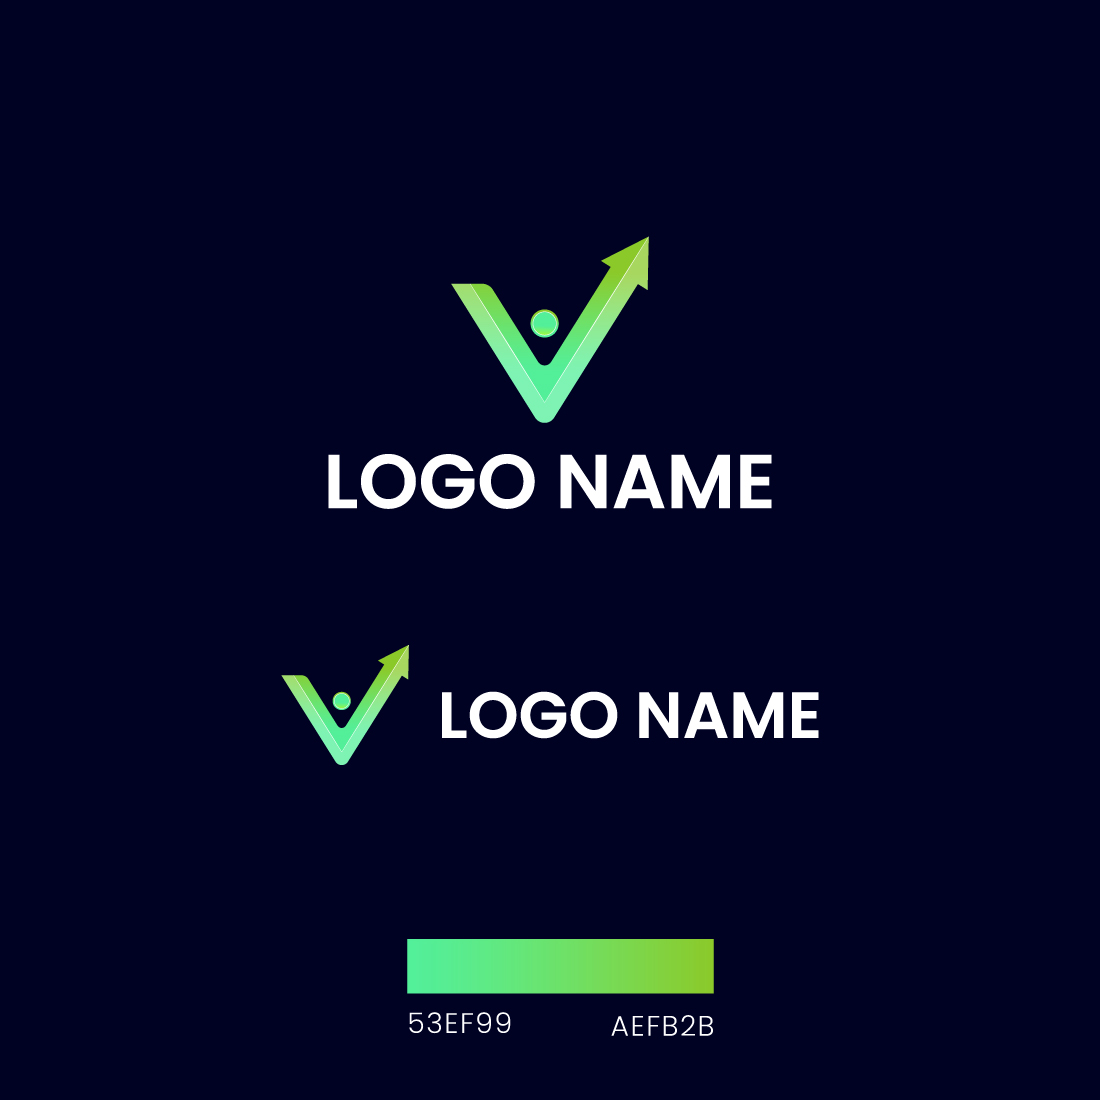 Digital Marketing Agency Logo / Letter V Logo preview image.